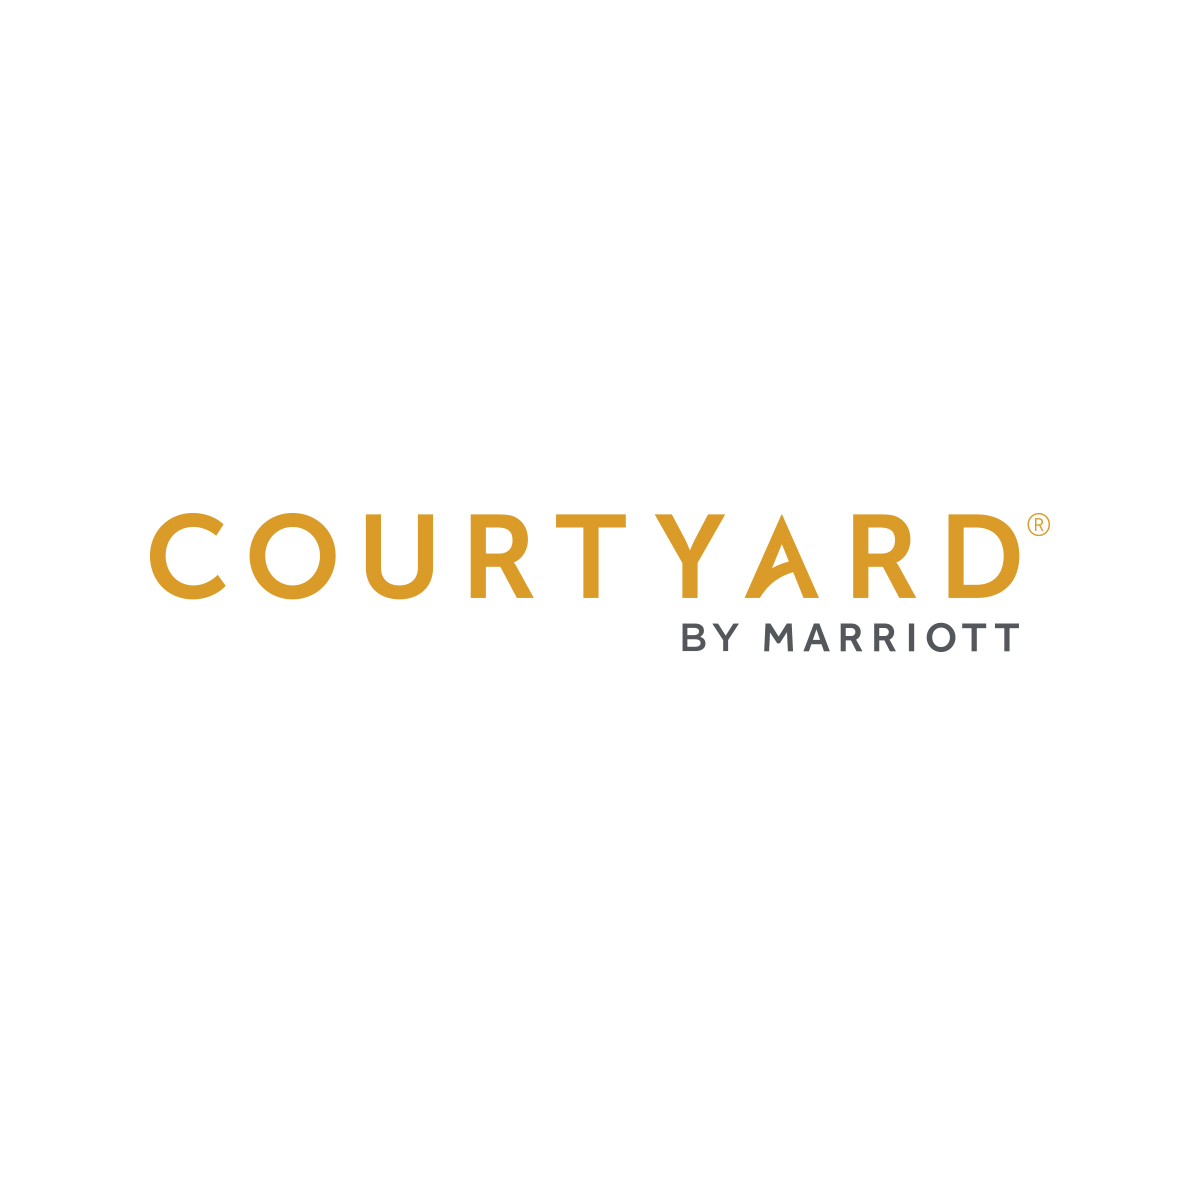 Courtyard Marriott 2019 SMCB Logo.jpg